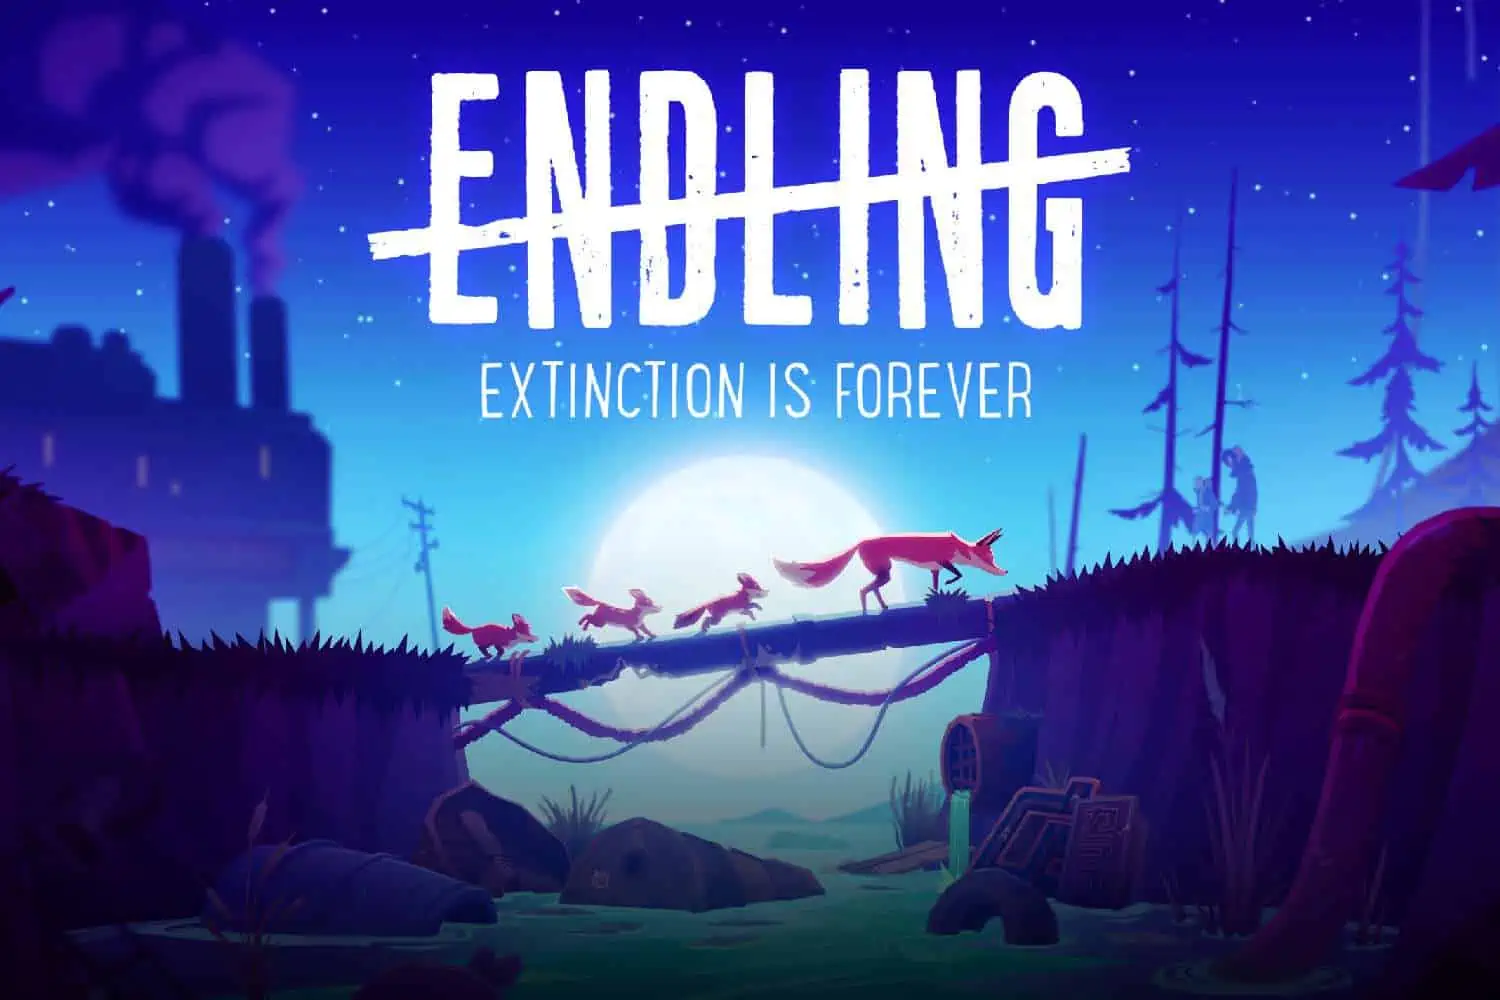 playstation plus July 3 games endling extinction is forever